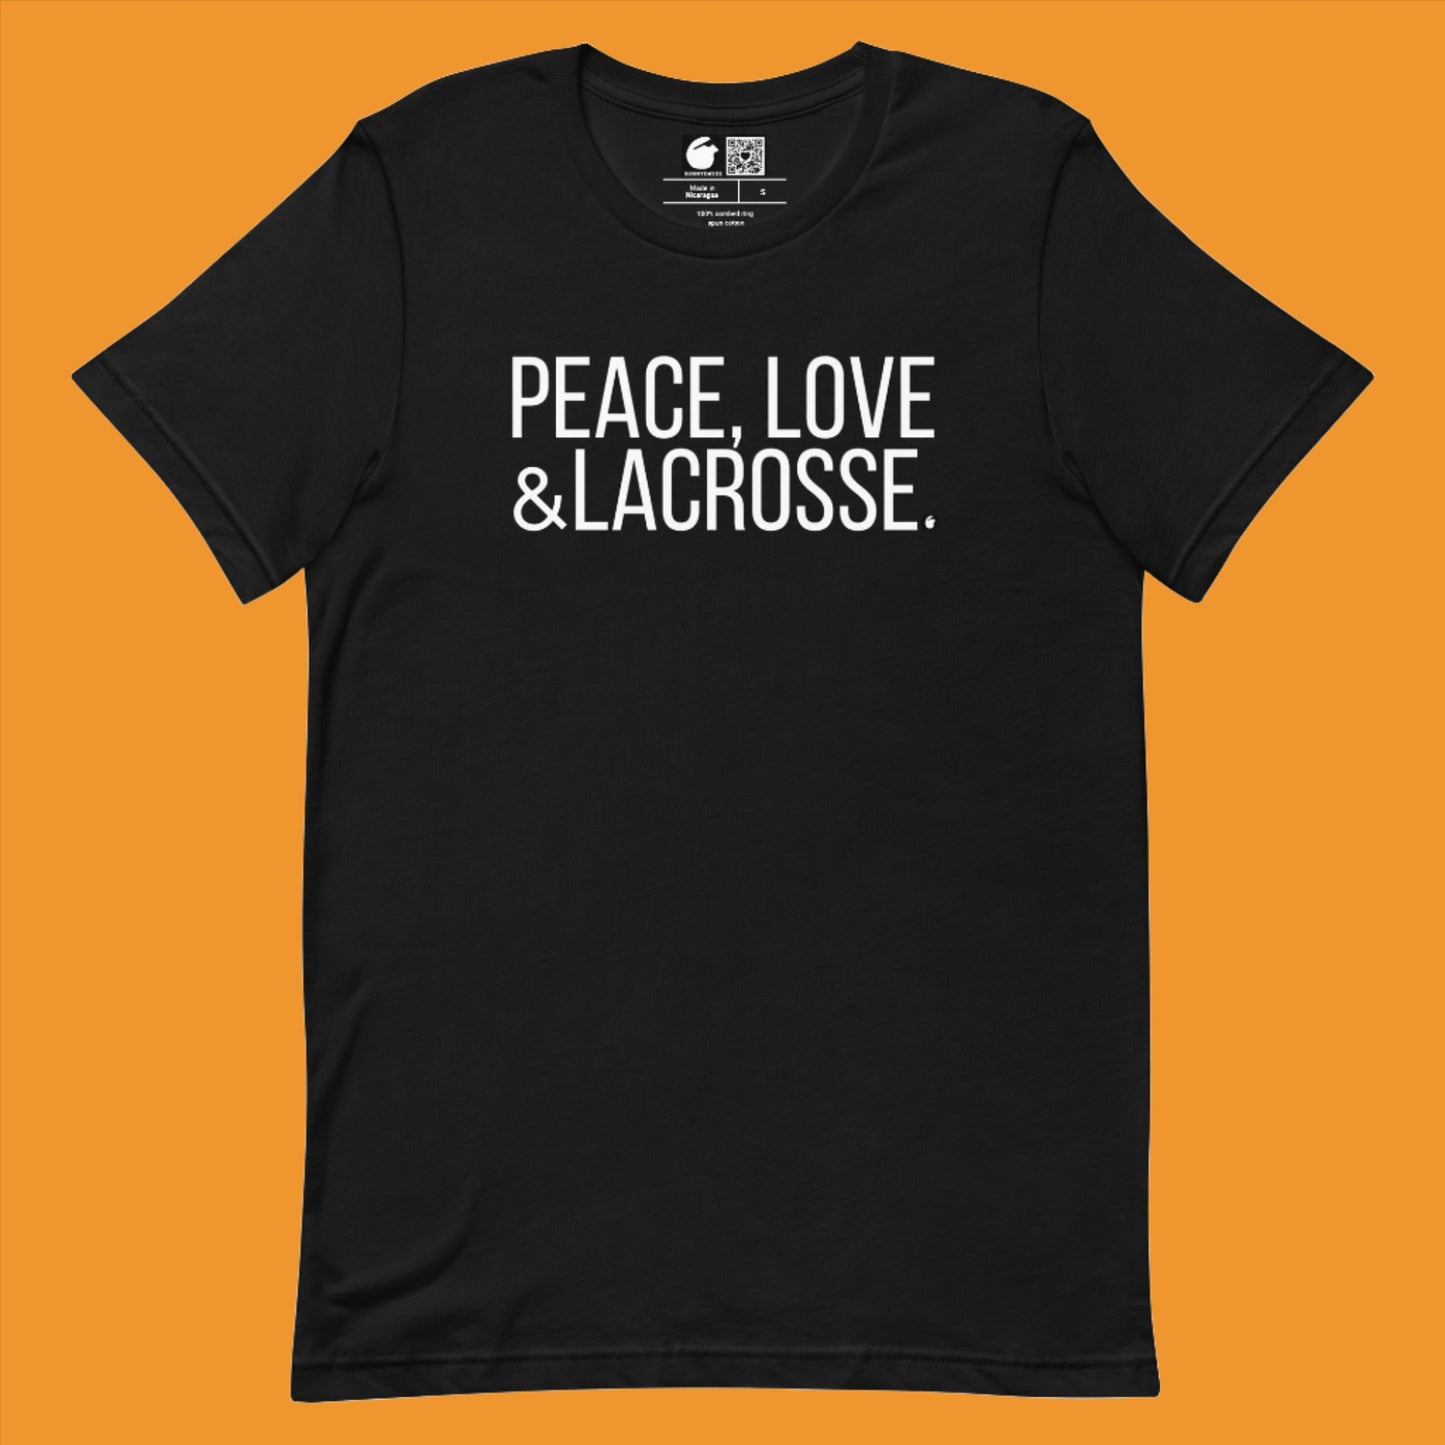 LACROSSE Short-Sleeve Unisex t-shirt